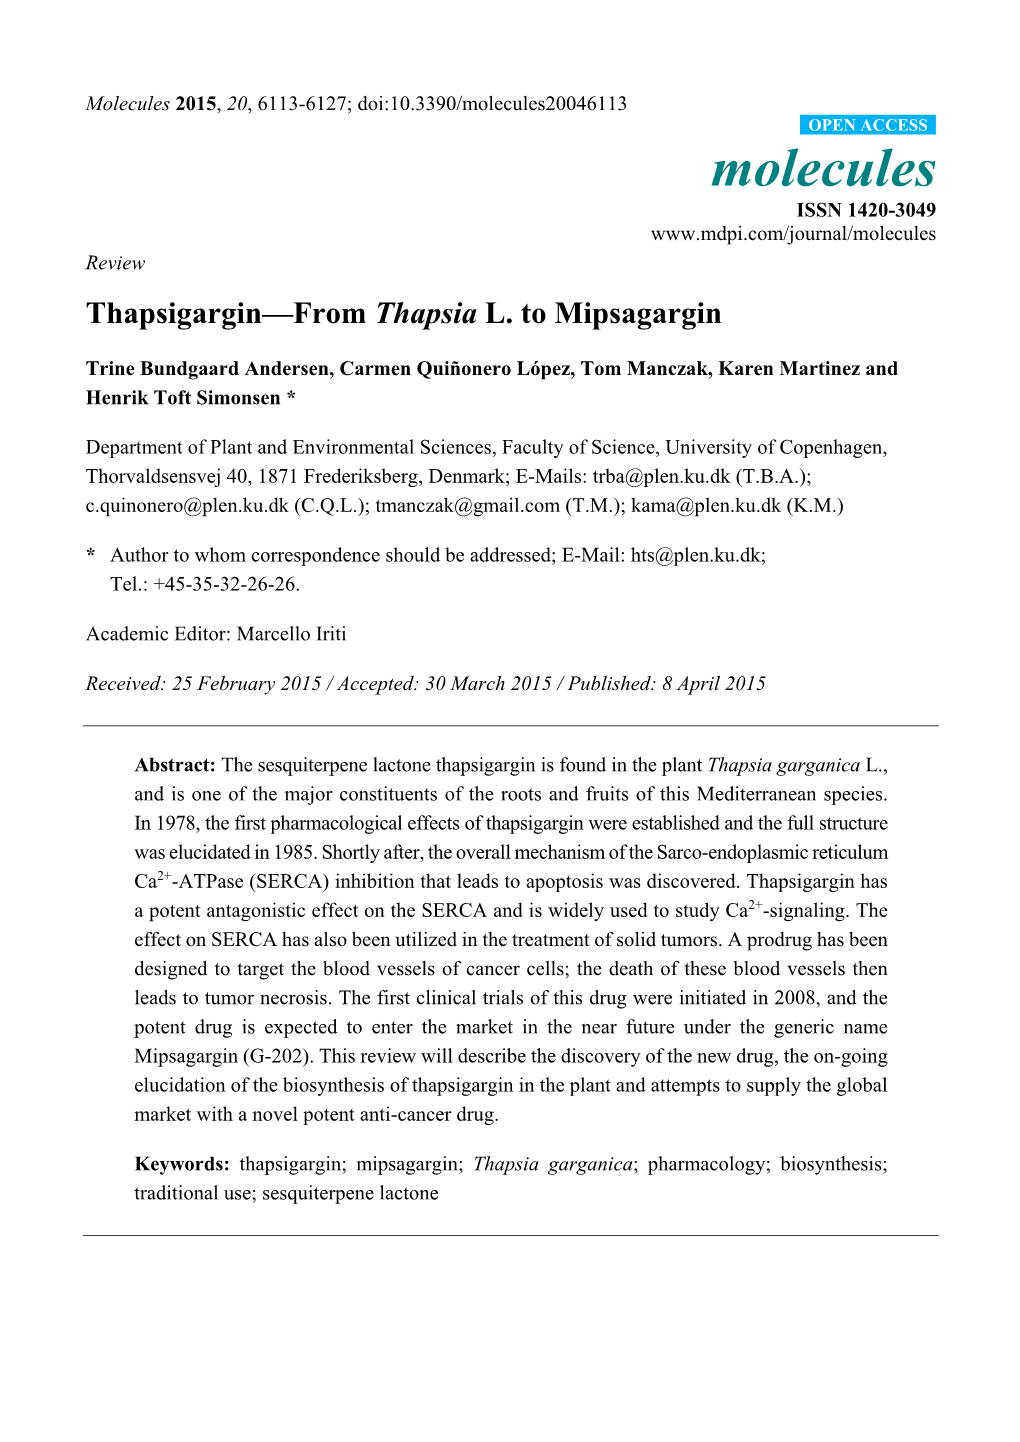 Thapsigargin—From Thapsia L. to Mipsagargin